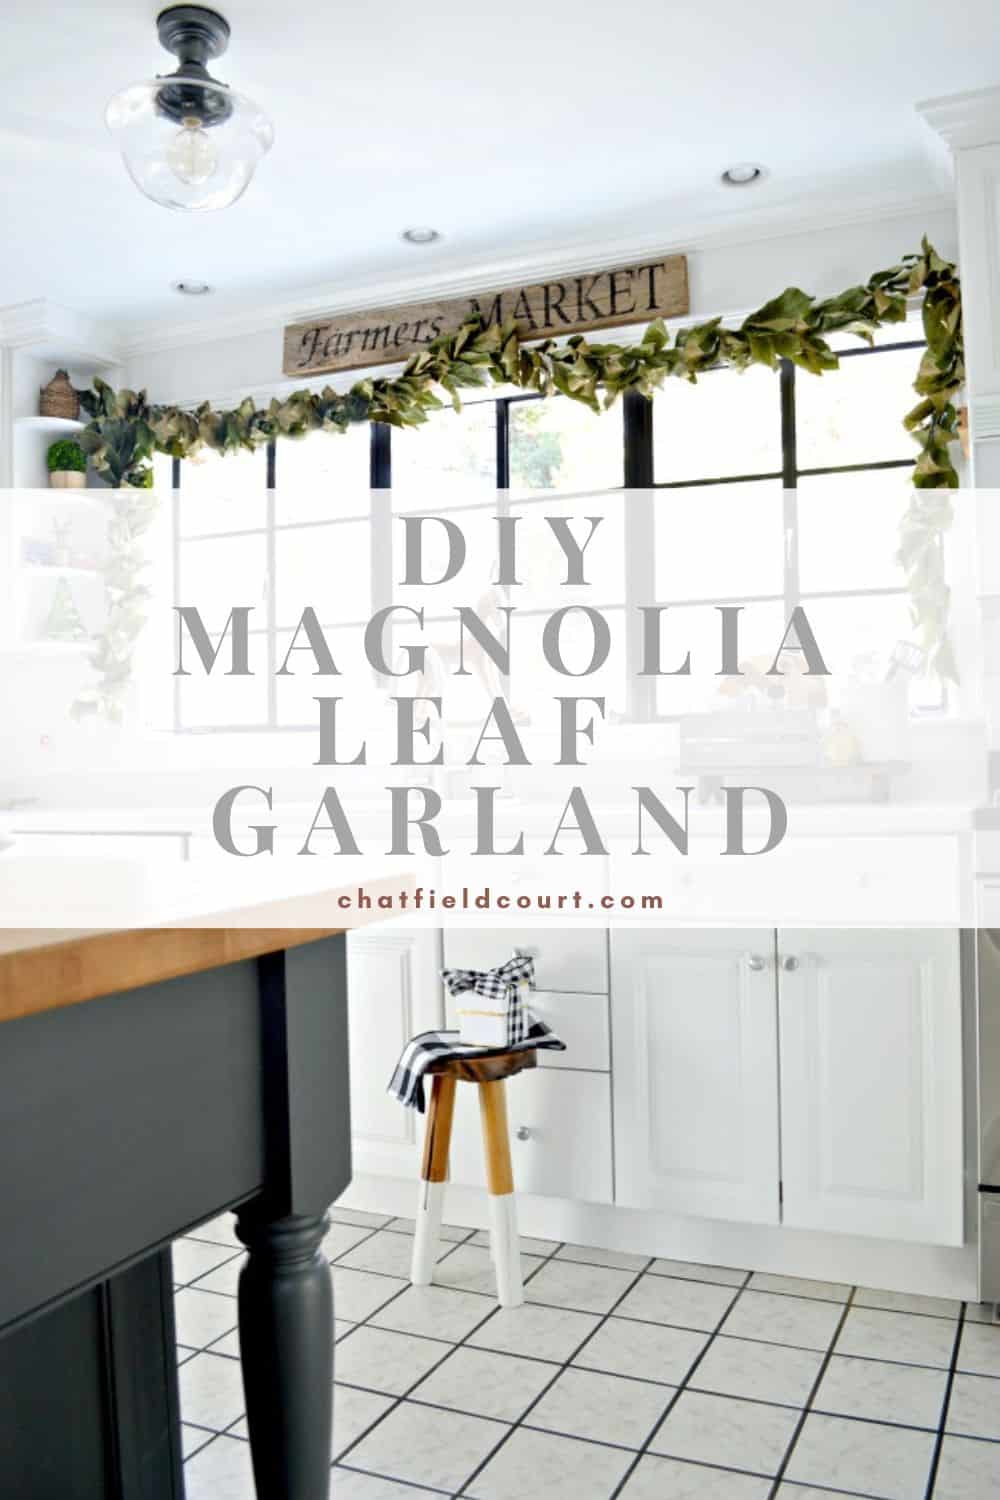 DIY magnolia leaf garland hanging on a window in a white kitchen